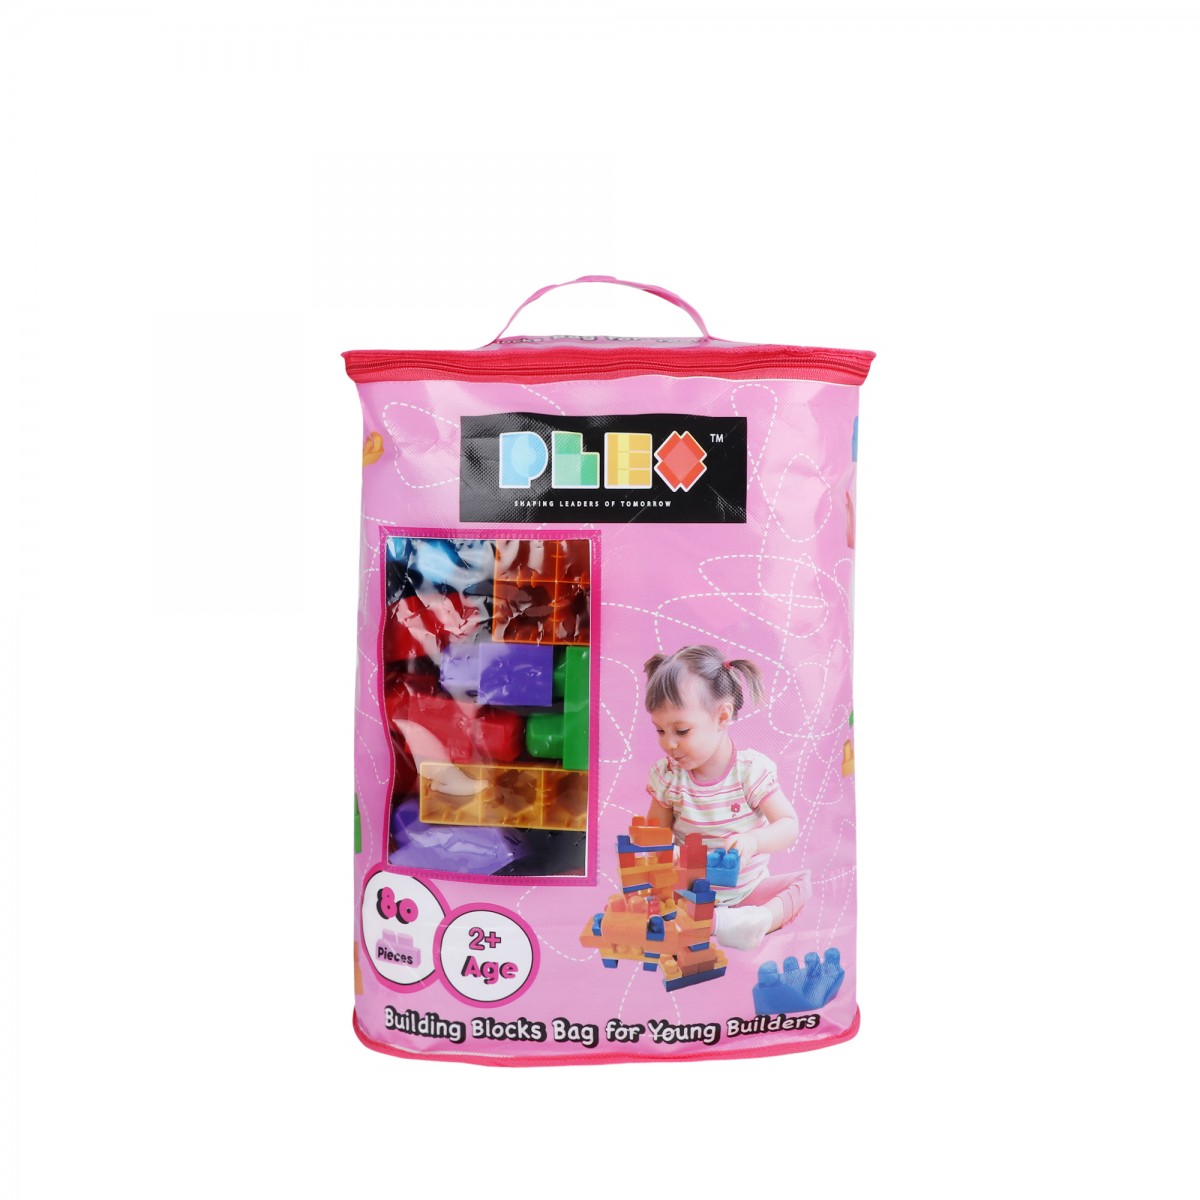 Plex Building Blocks Bag Pack Pink